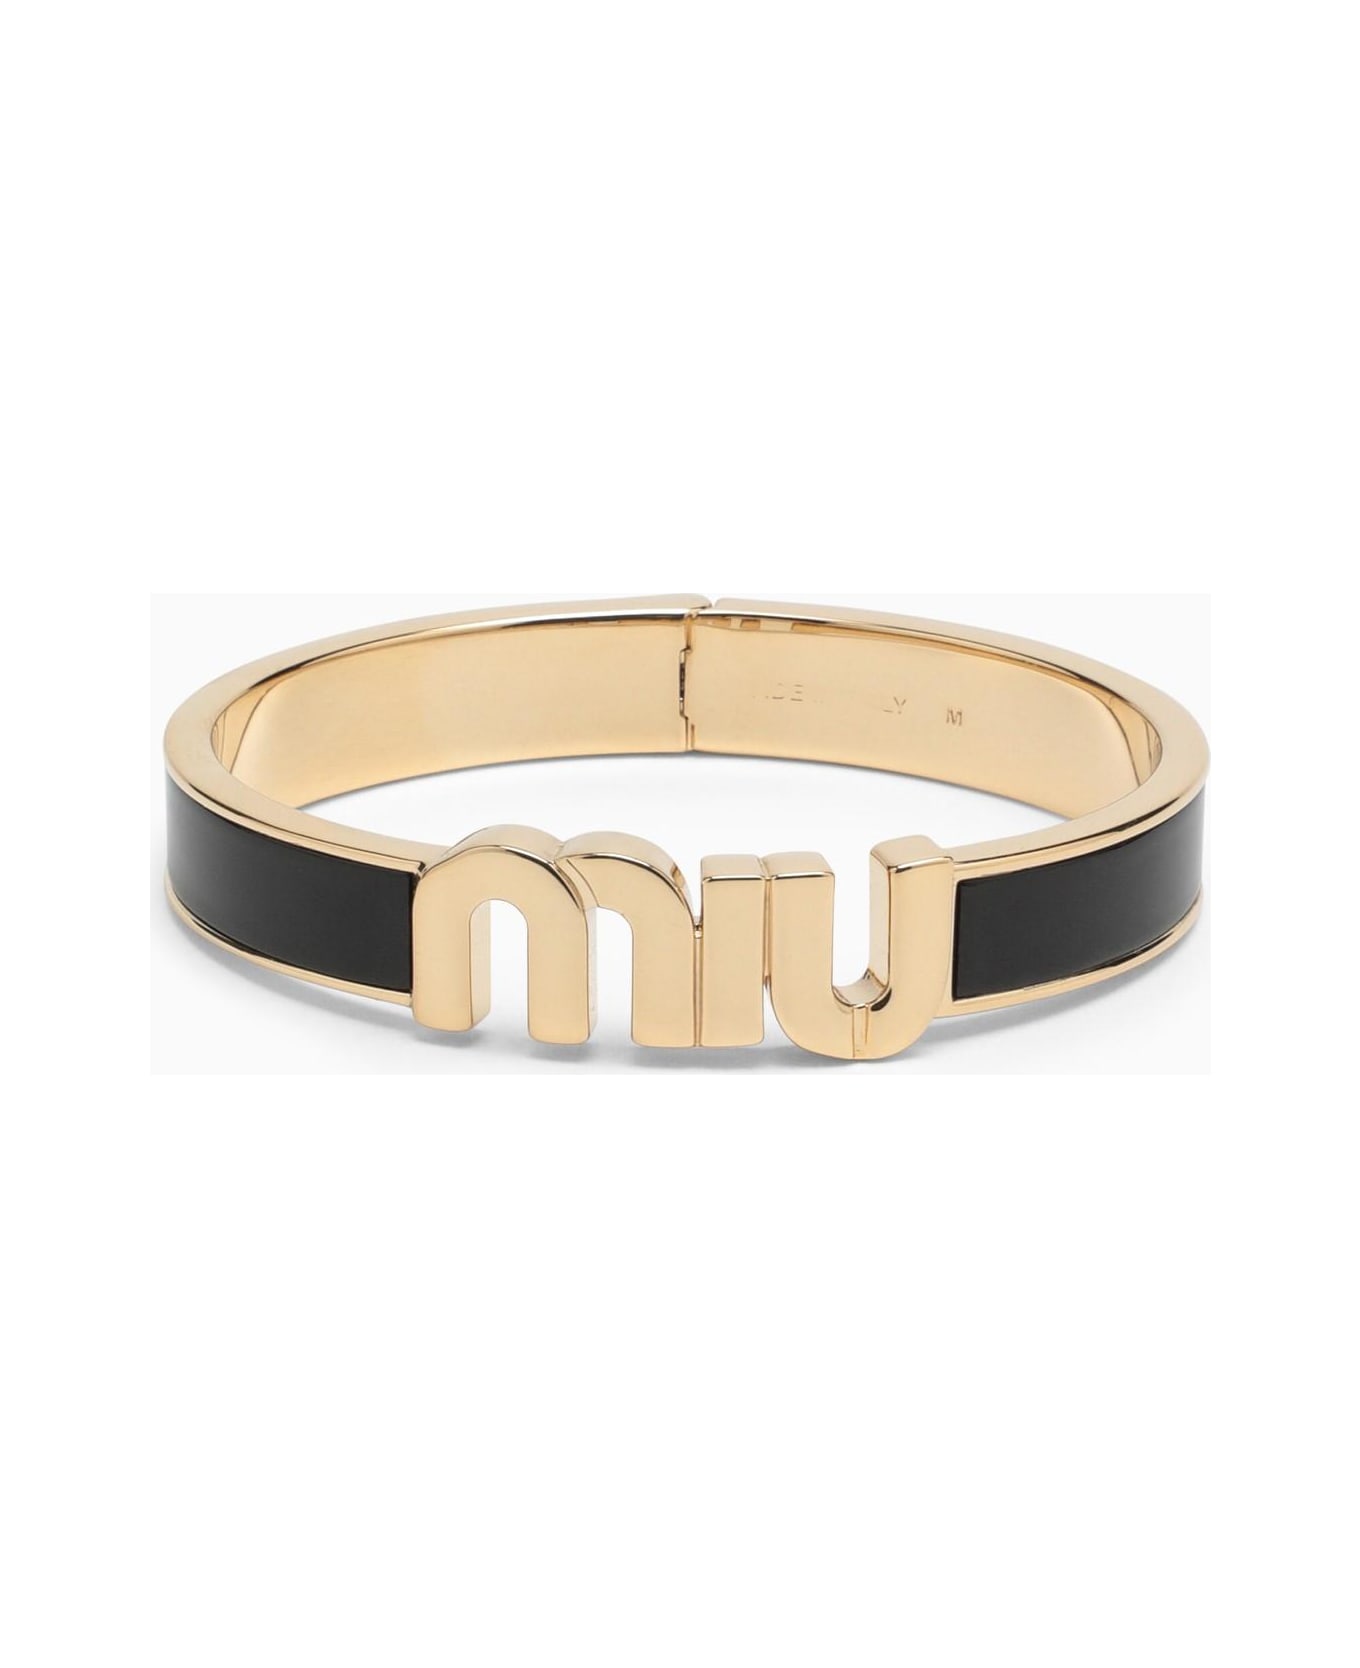 Miu Miu Black\/gold Rigid Bracelet - F0002